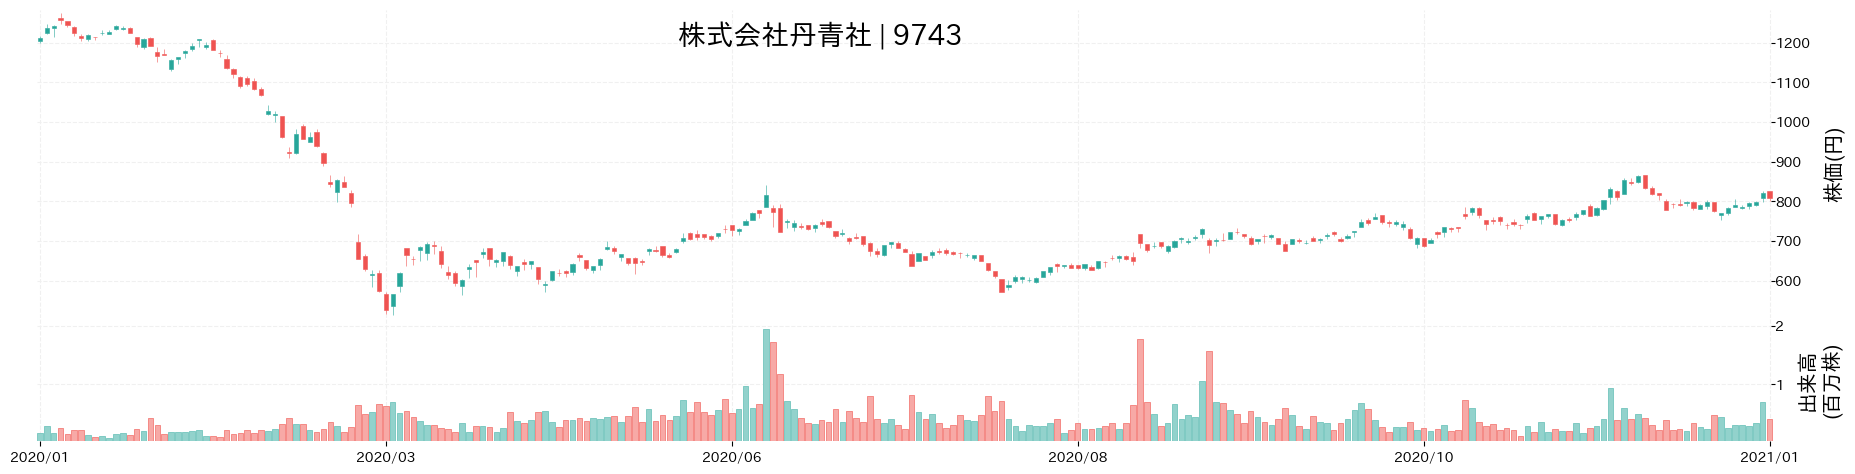 丹青社の株価推移(2020)